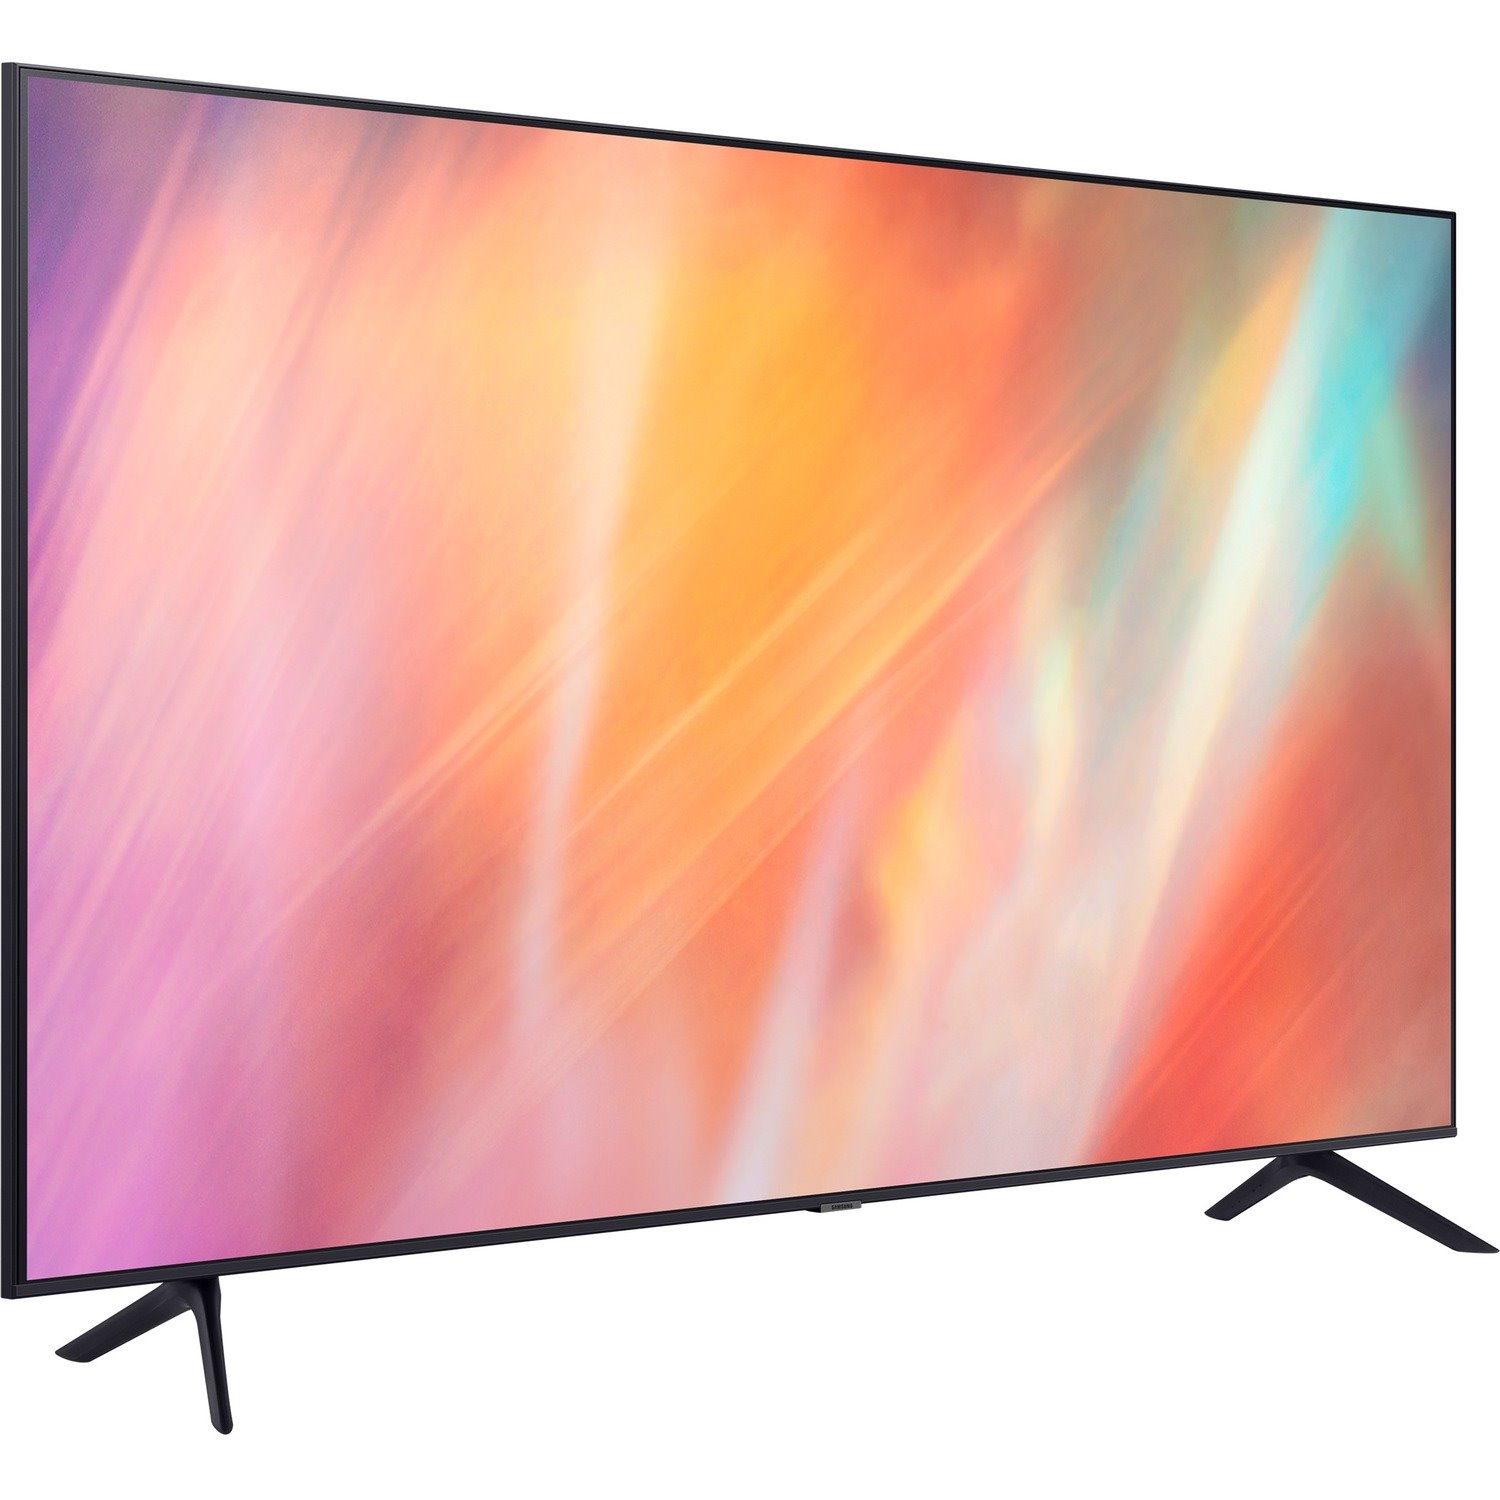 Samsung LH43BEAHLGW 109.2 cm Smart LED-LCD TV - 4K UHDTV - Titan Gray